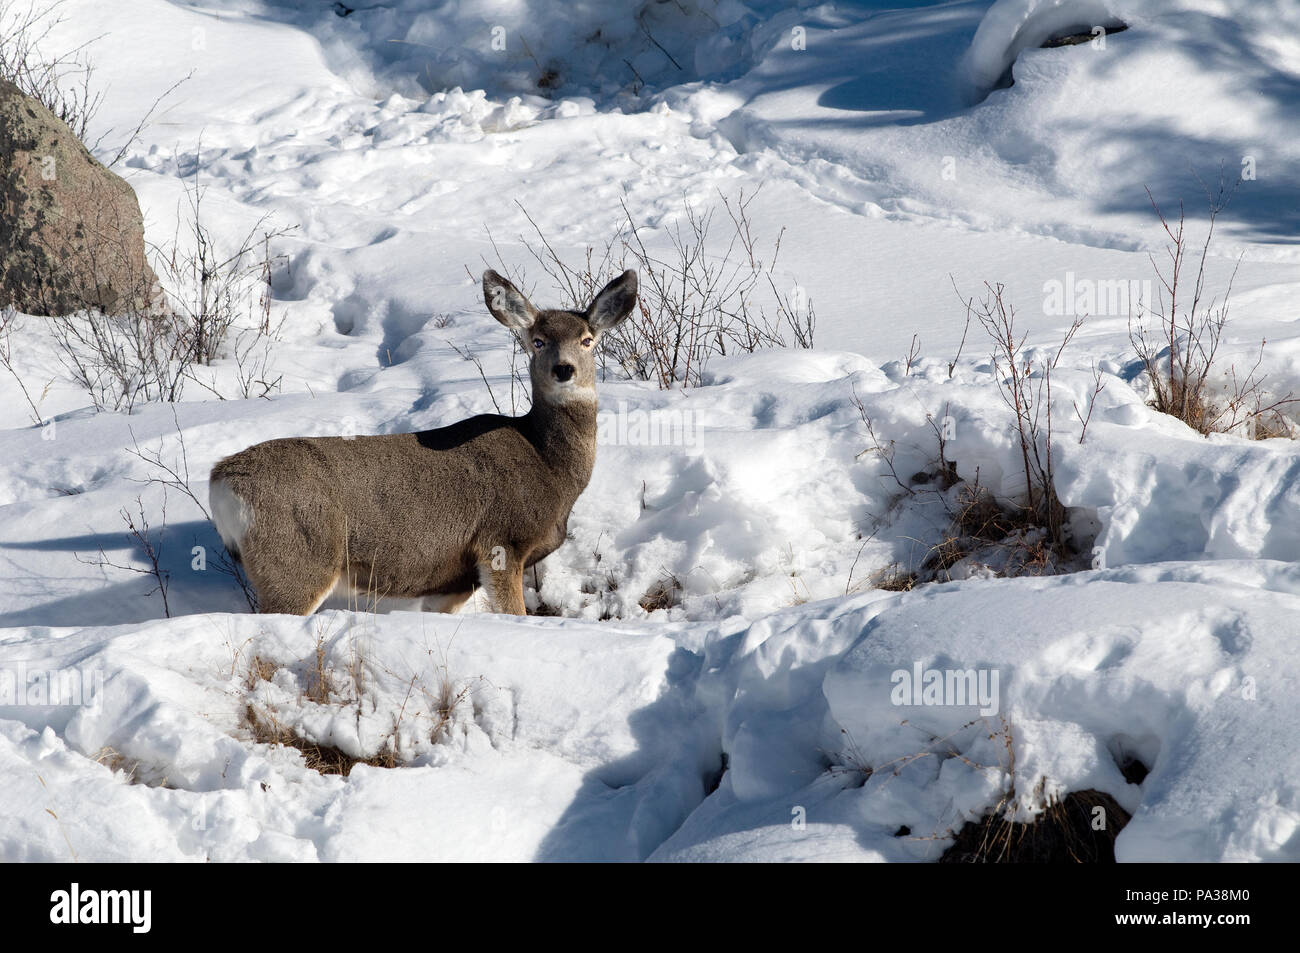 Mule Deer (Odocoileus hemionus) - America settentrionale Cerf mulet - Cerf à queue noire Foto Stock